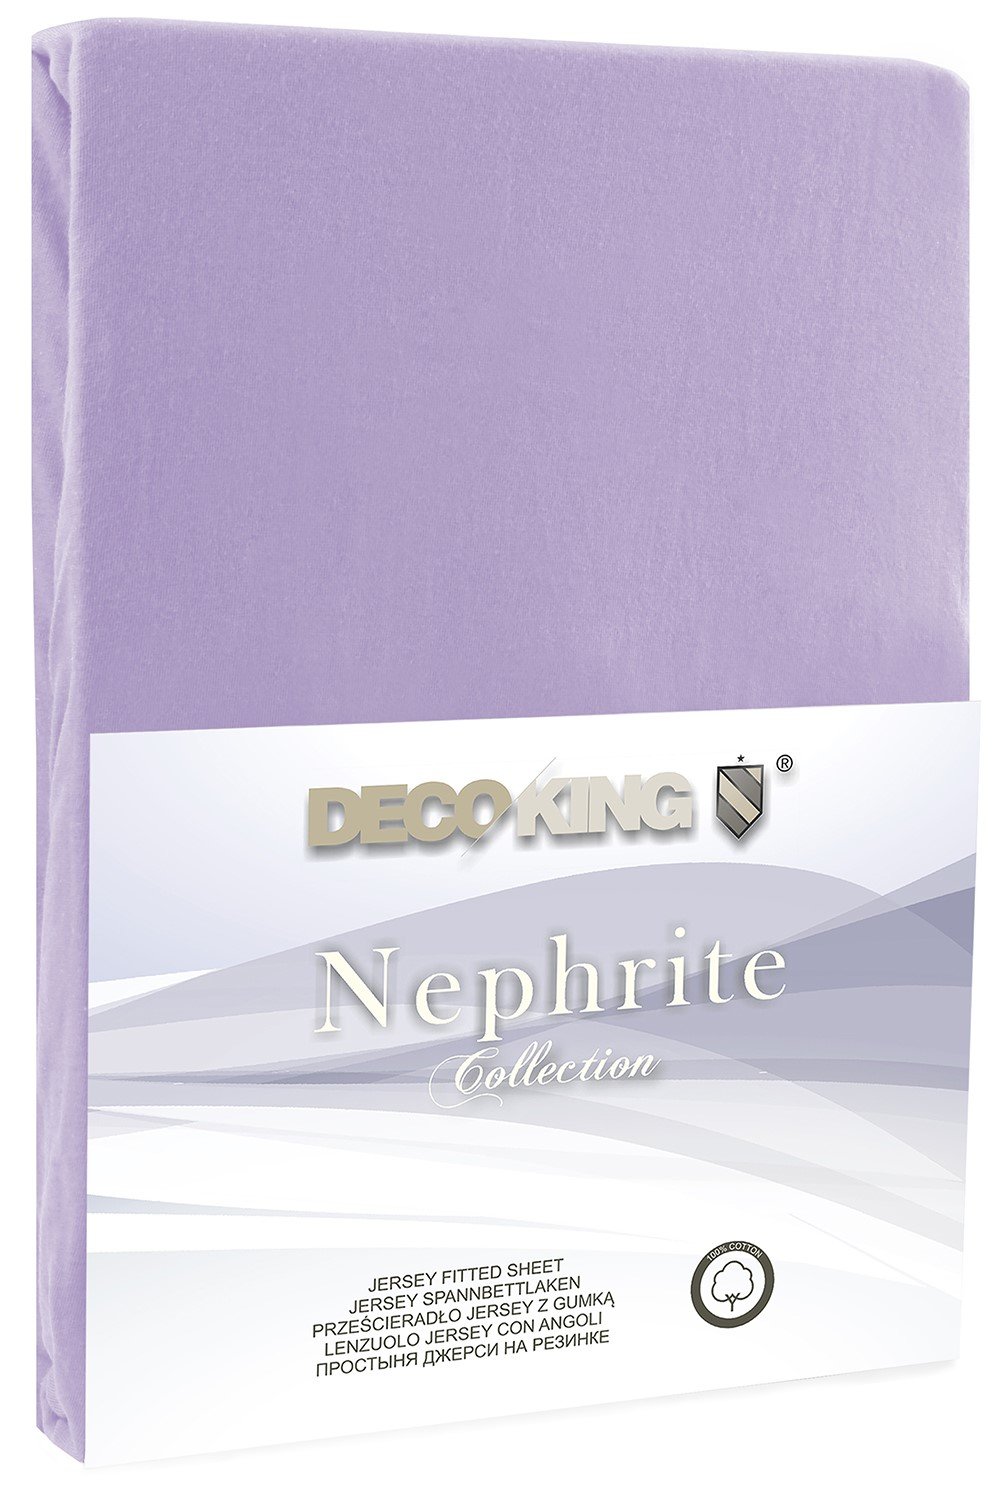 Jersey paklodė su guma Decoking NEPHRITE Light violet, 140x200 cm